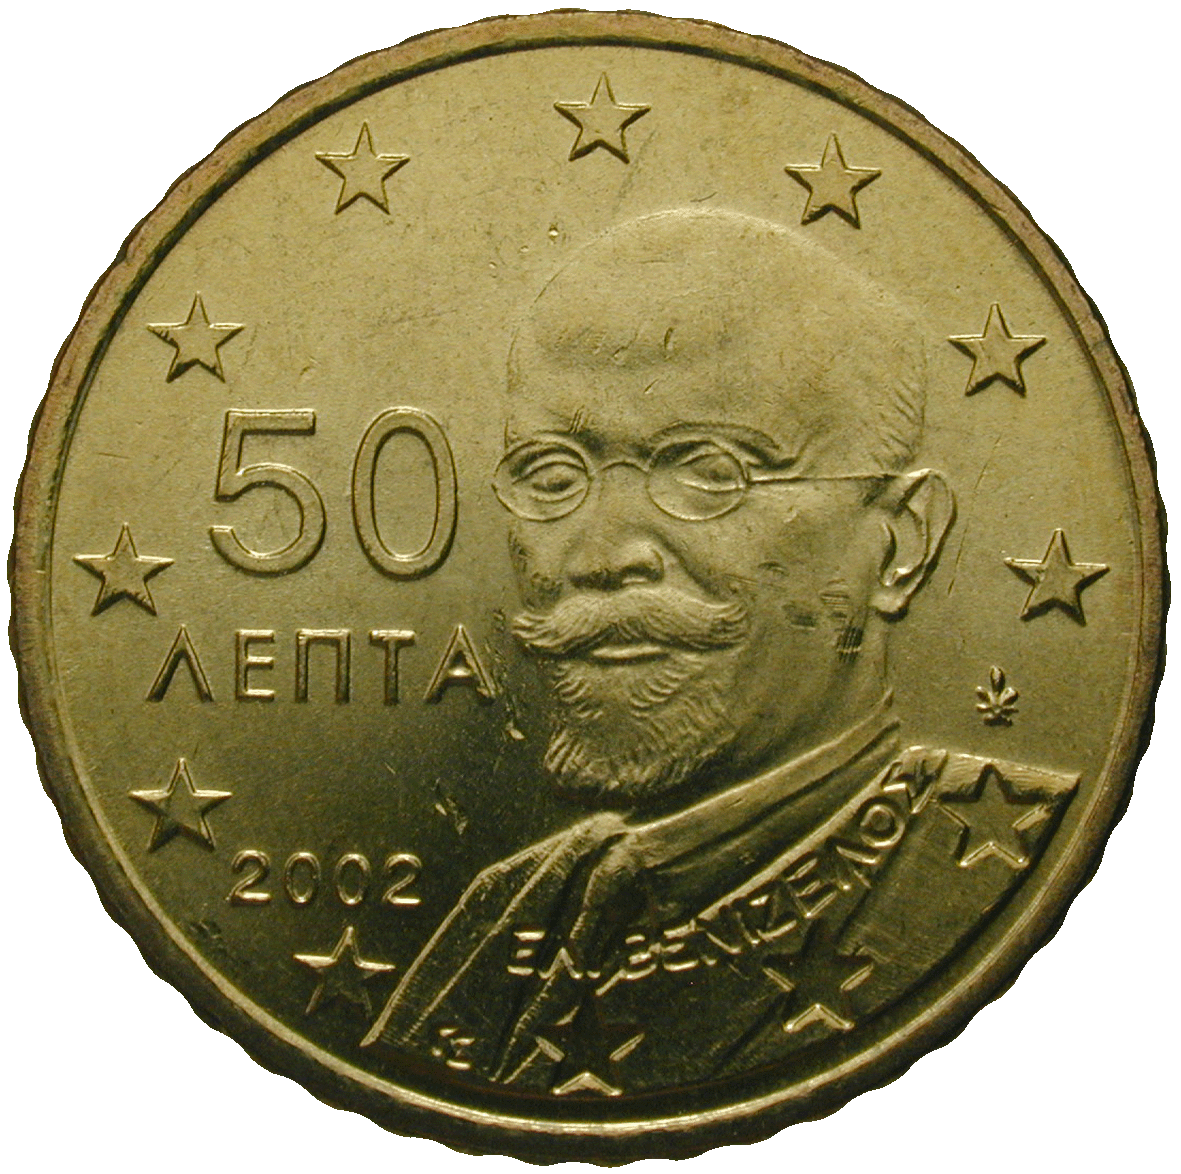 Republik Griechenland, 50 Eurocent 2002 (obverse)